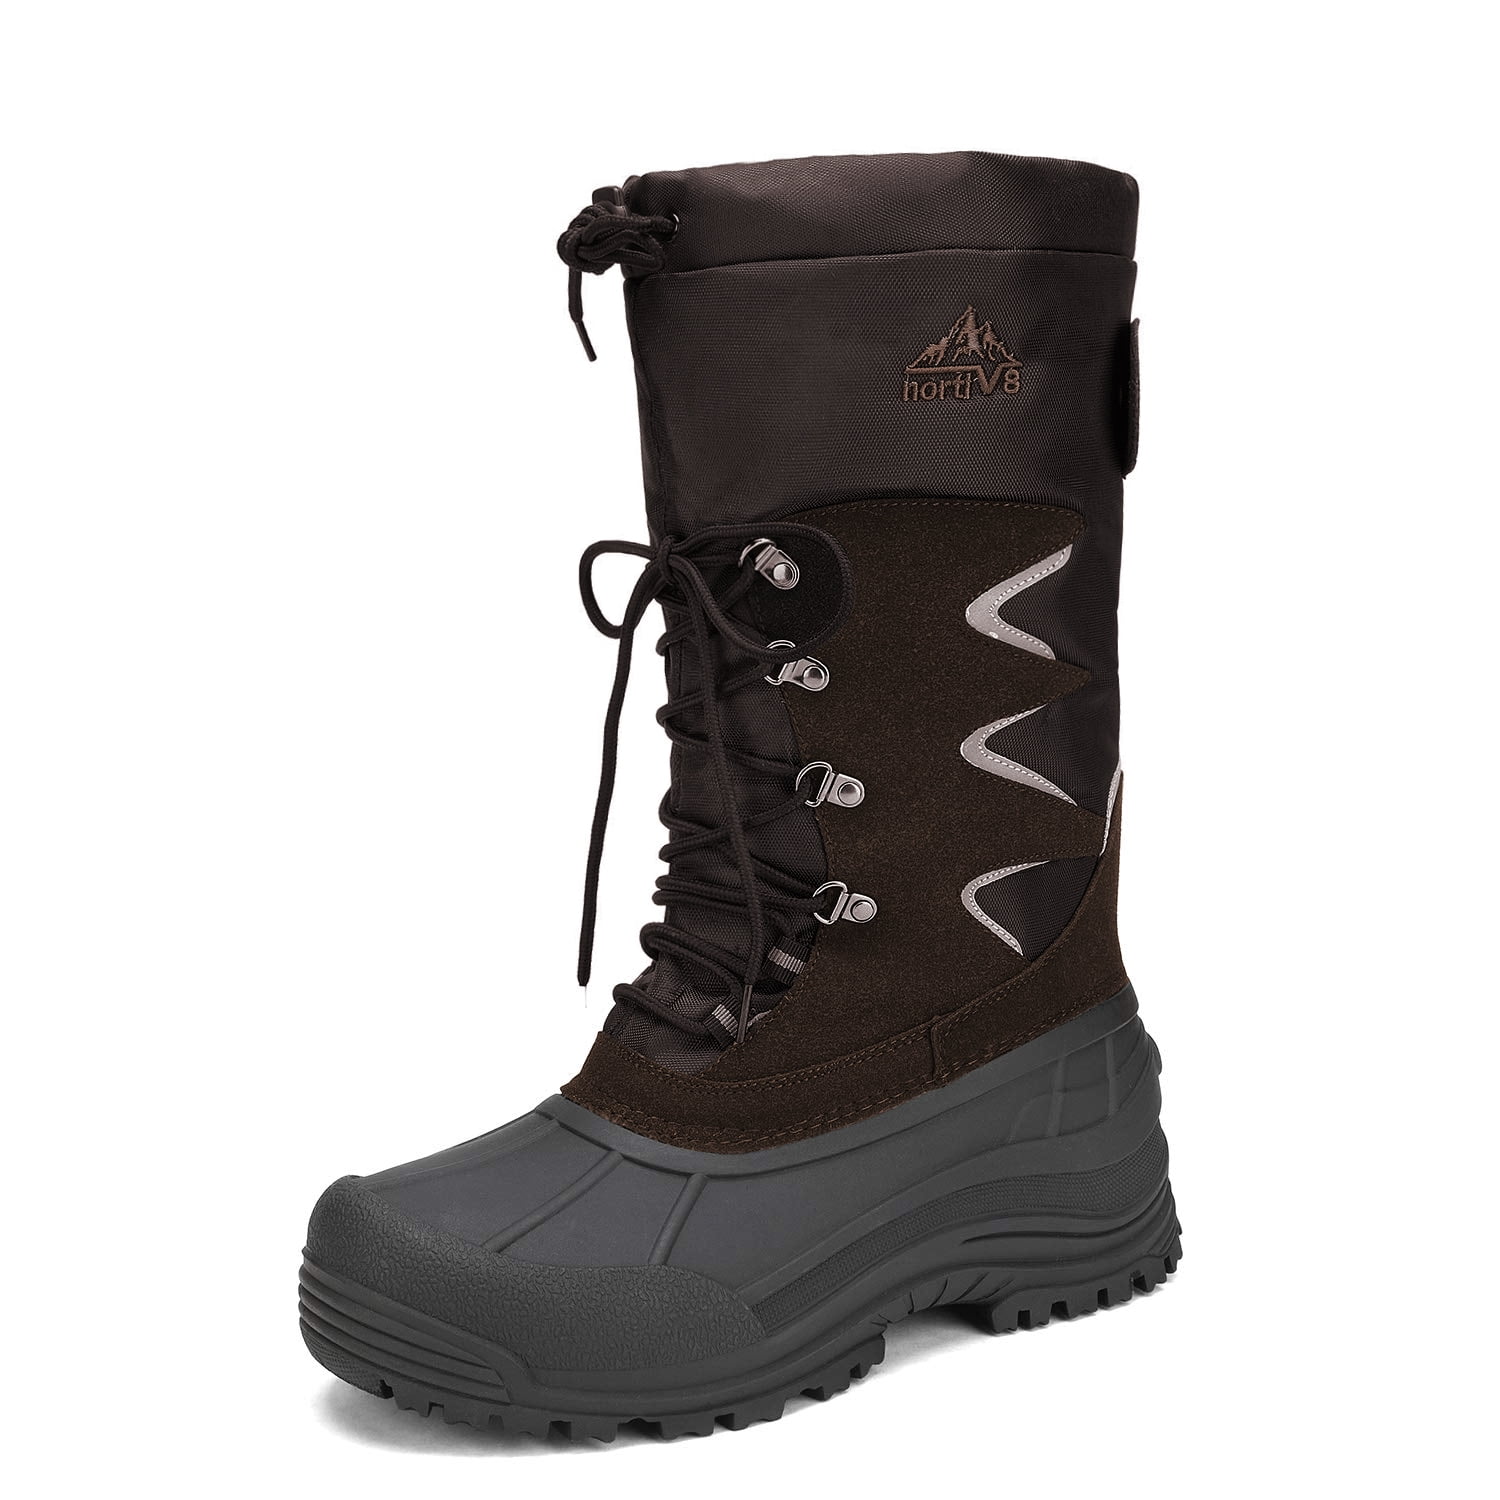 NORTIV 8 Men's Waterproof Hiking Winter Snow Boots Insulated Liner ...